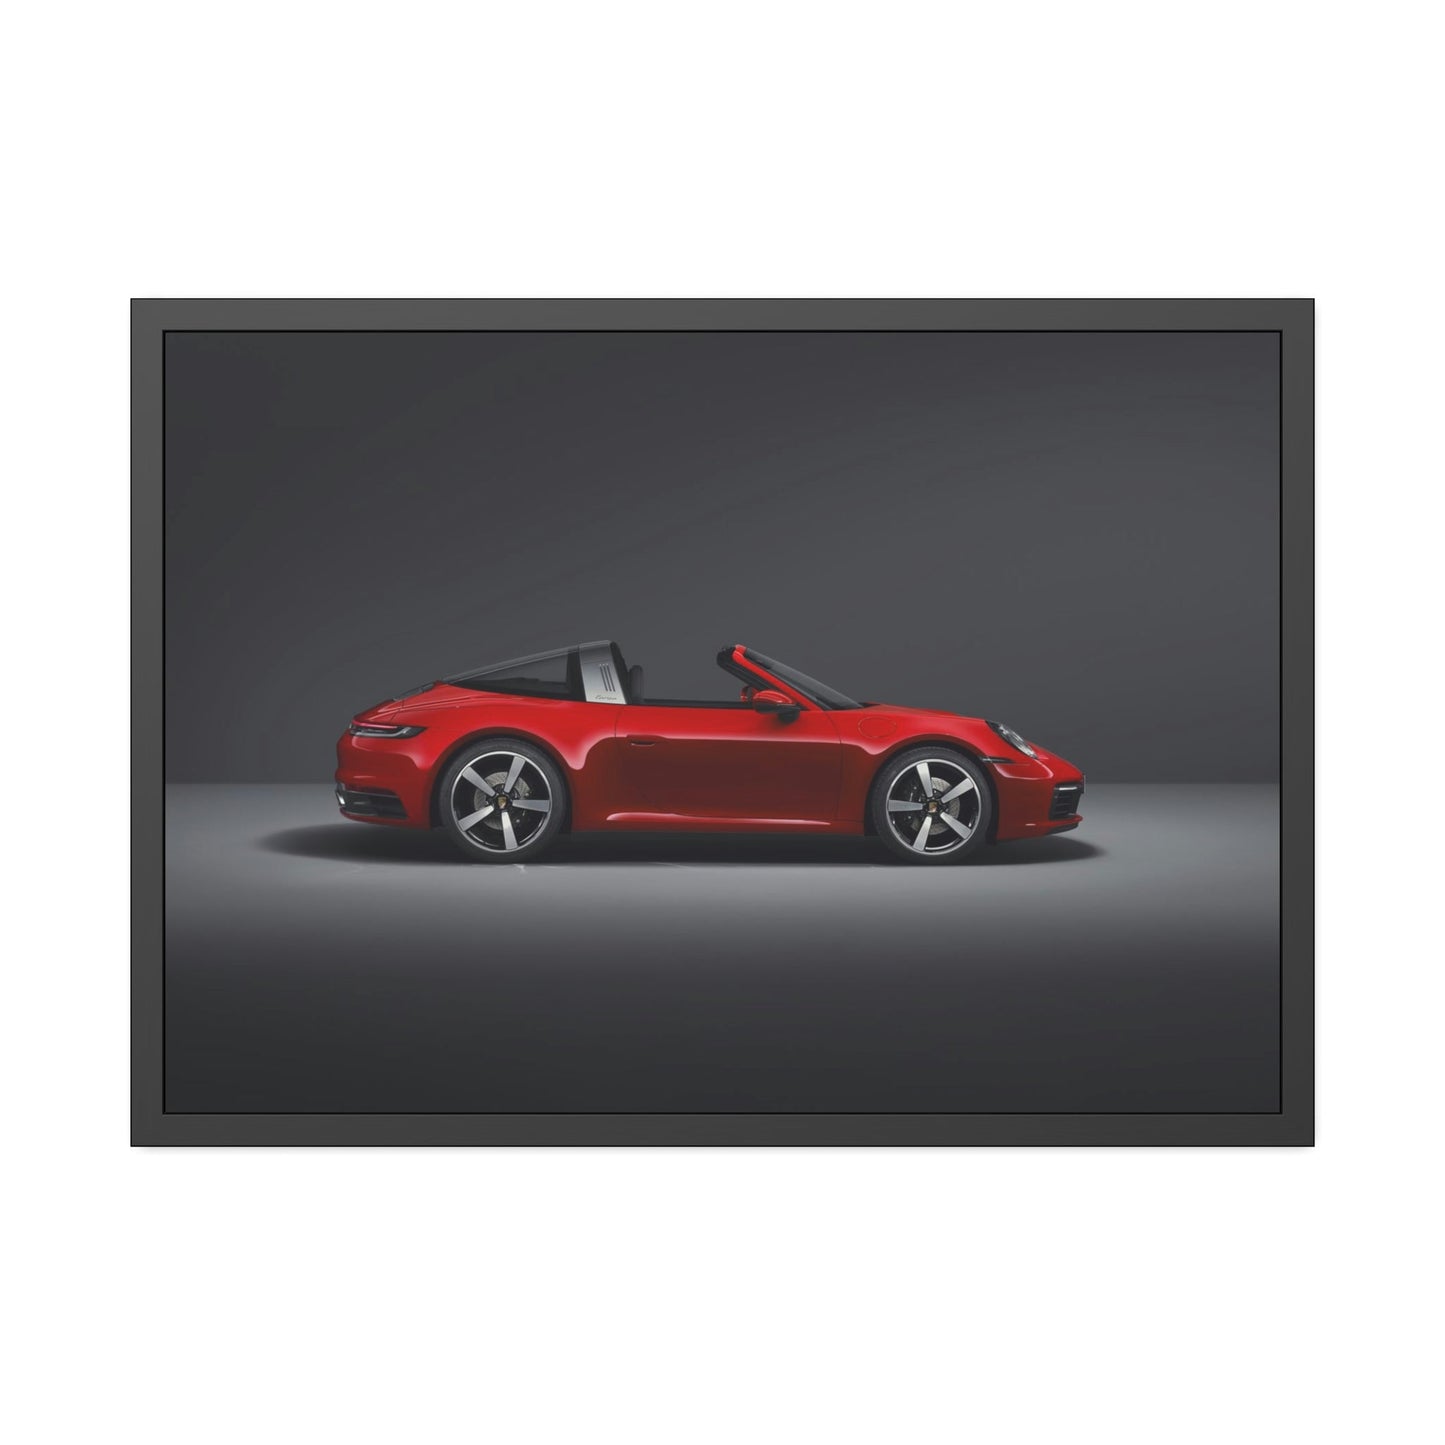 Ravishing Red: Canvas Wall Art Print of a Sleek and Stylish Red Porsche